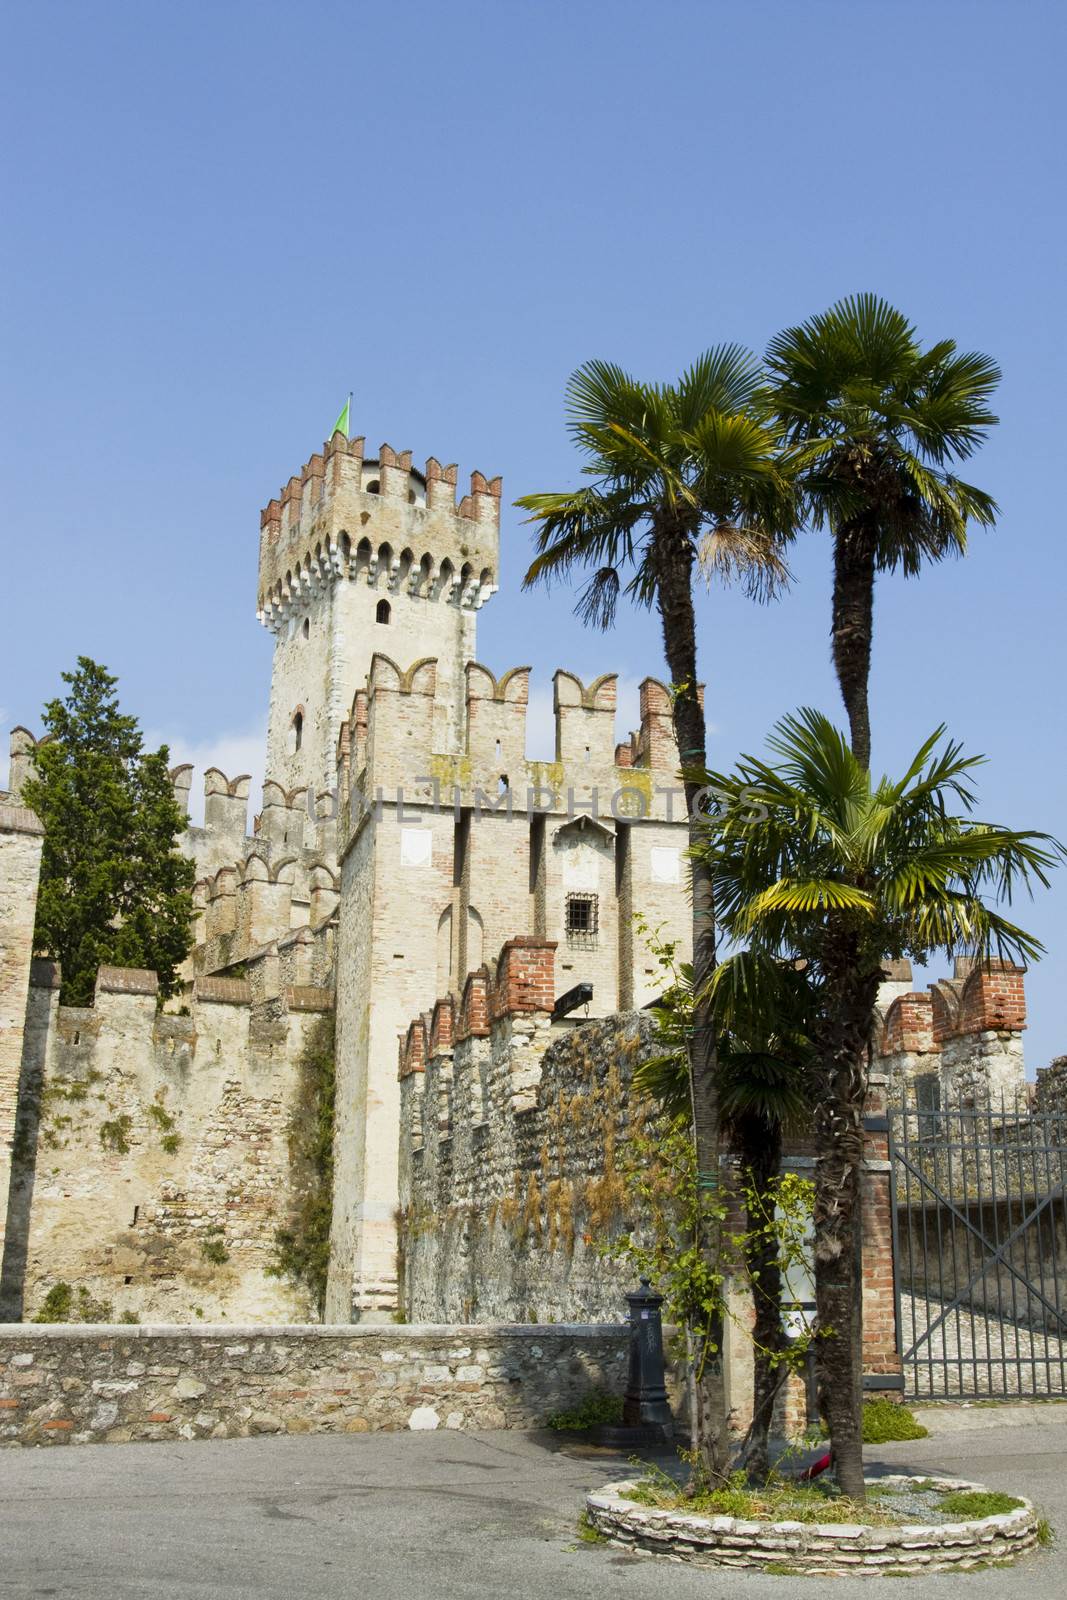 Sirmione castle, Garda lake, Brescia, Italy